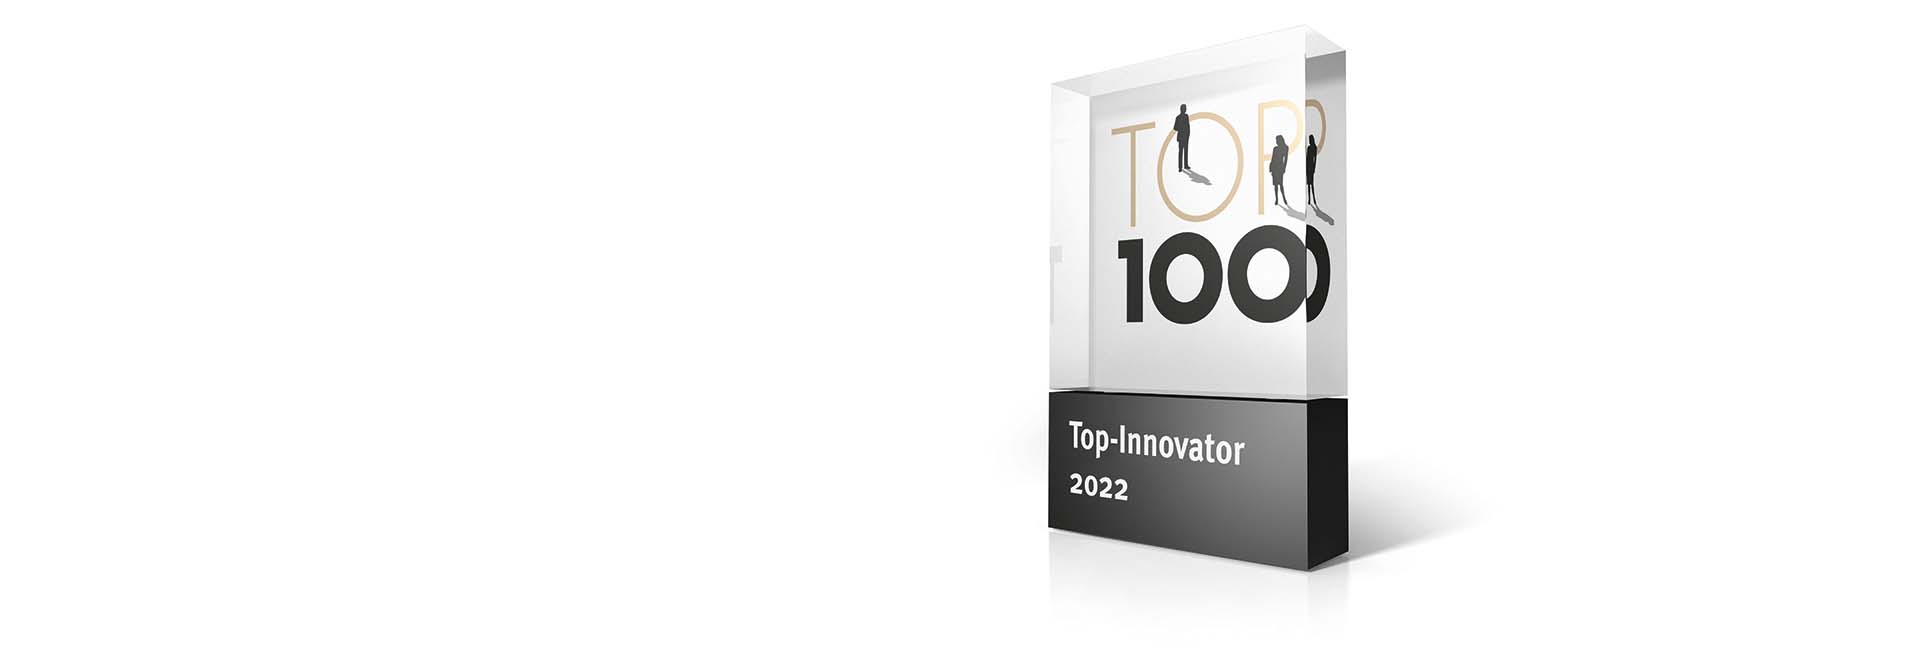 A Erwin Junker Maschinenfabrik GmbH recebe o selo TOP 100